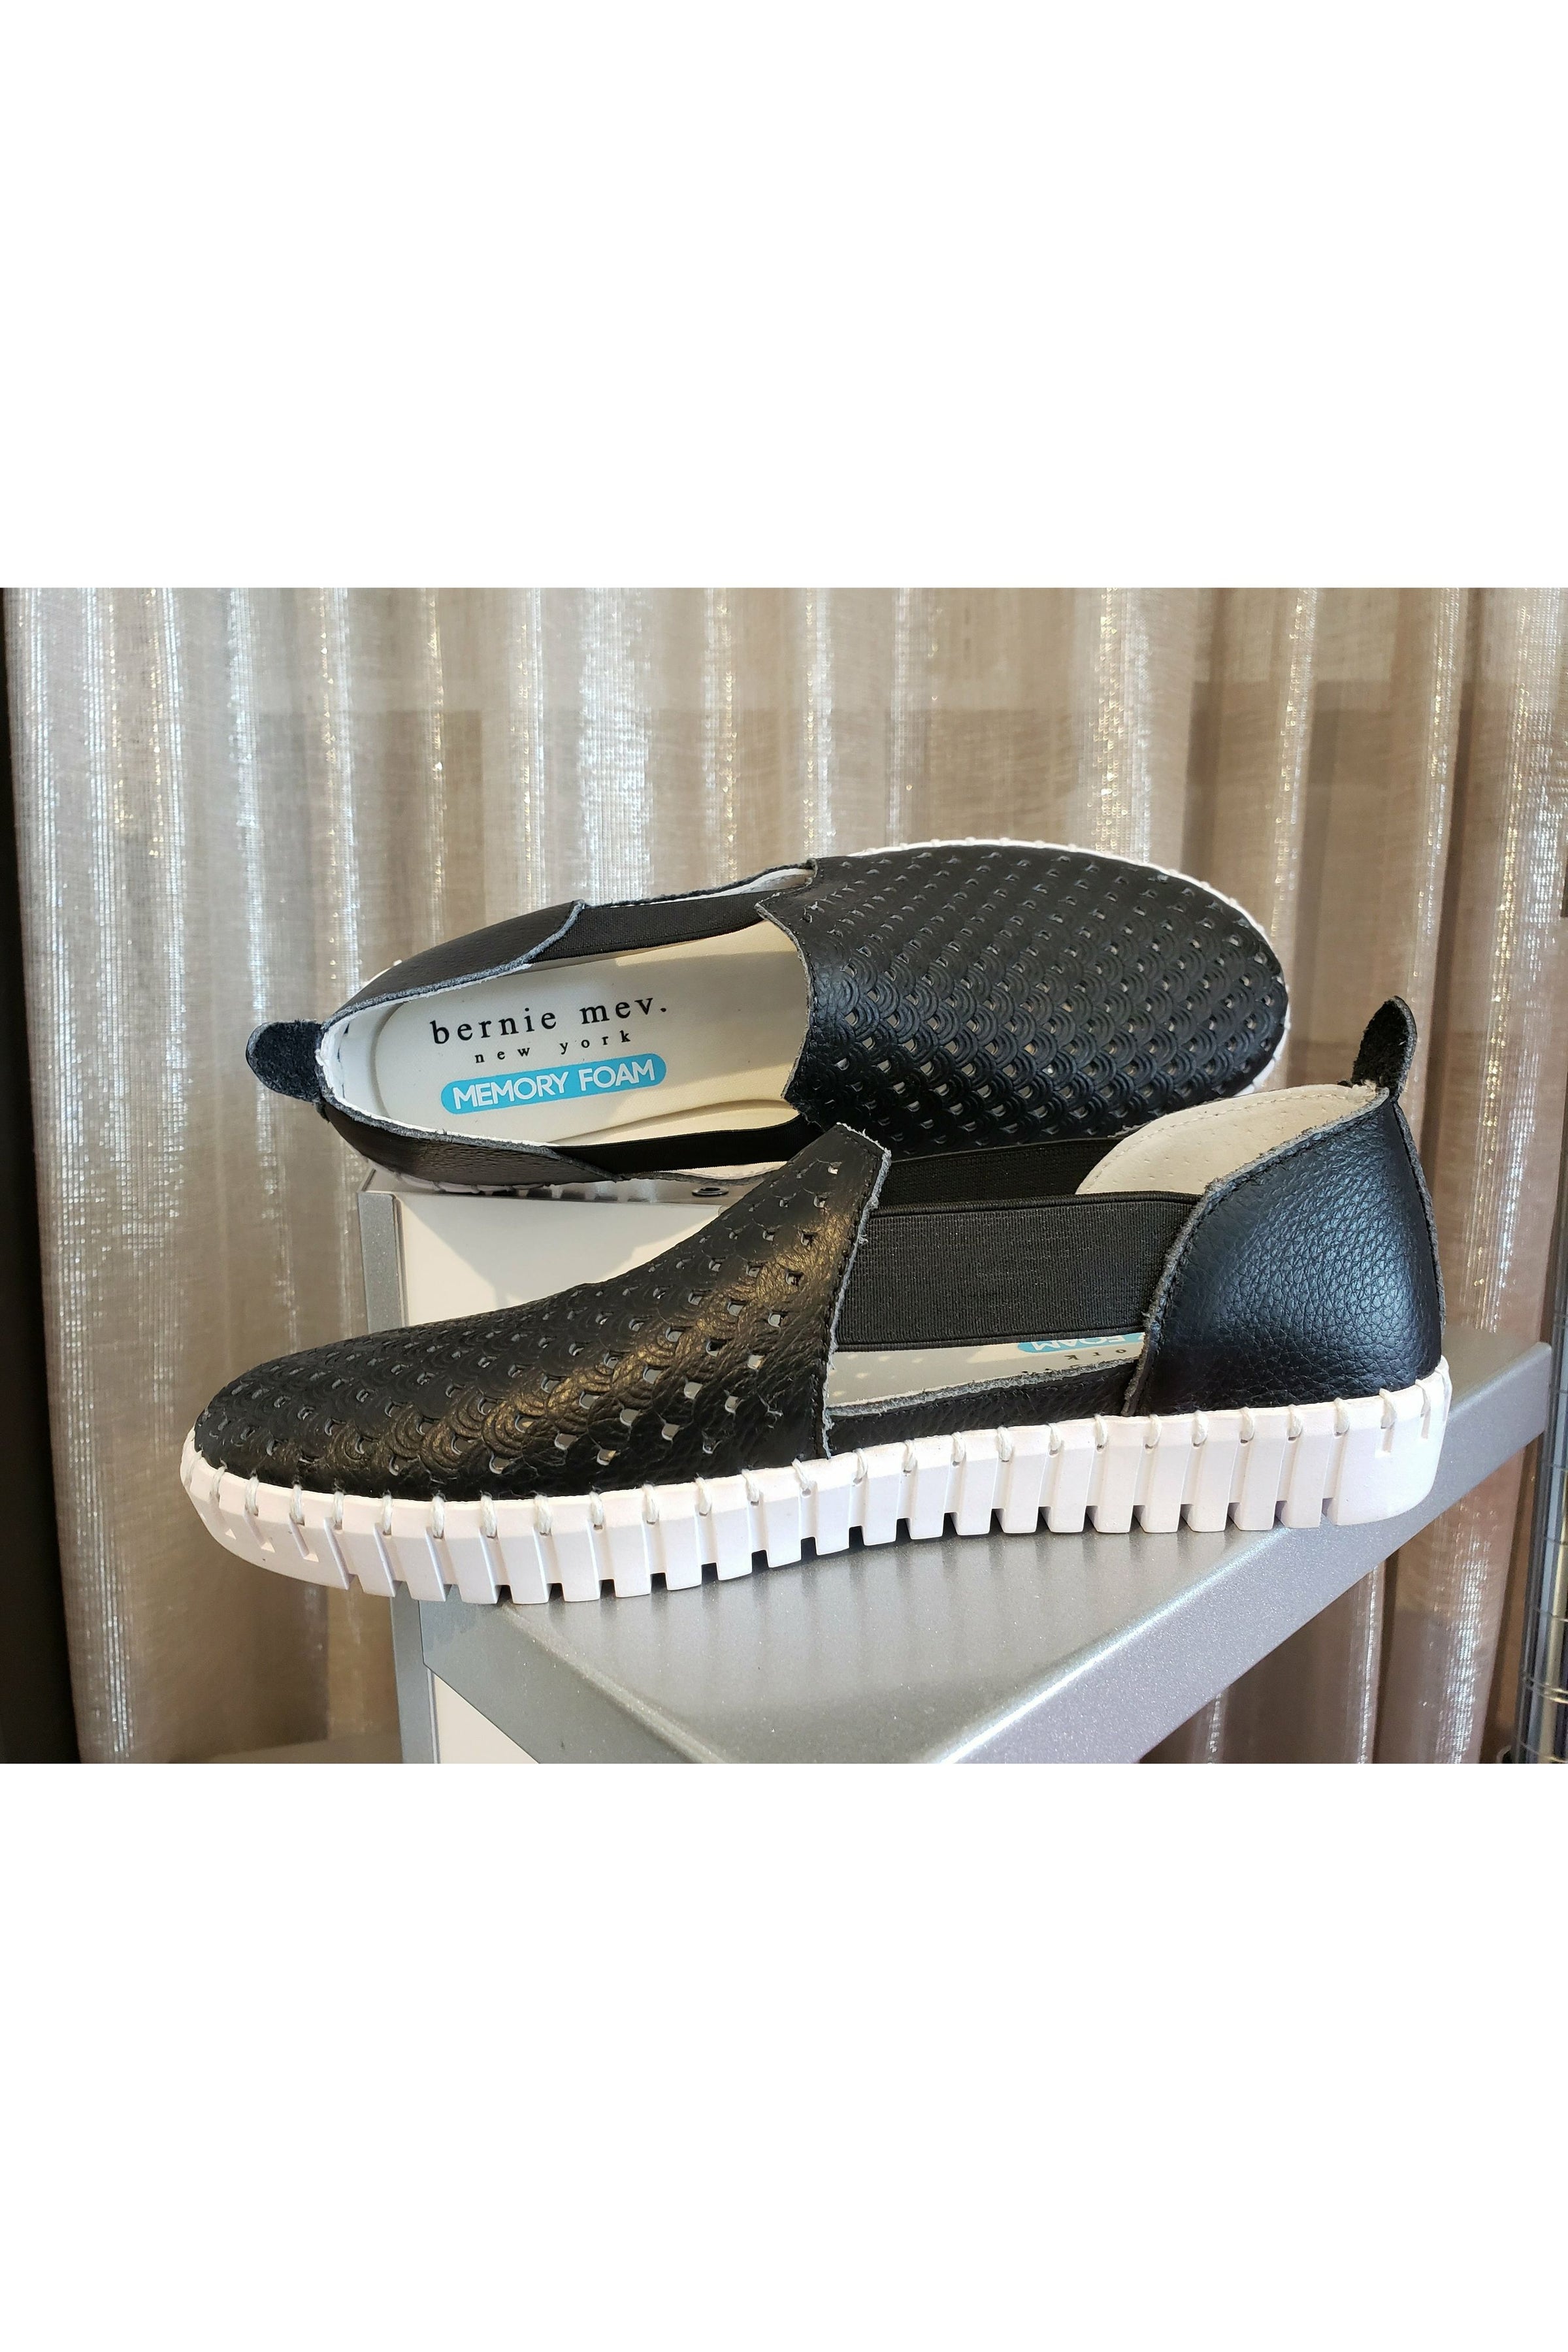 Bernie Mev Fashion Sneaker - Style Wayde, pair